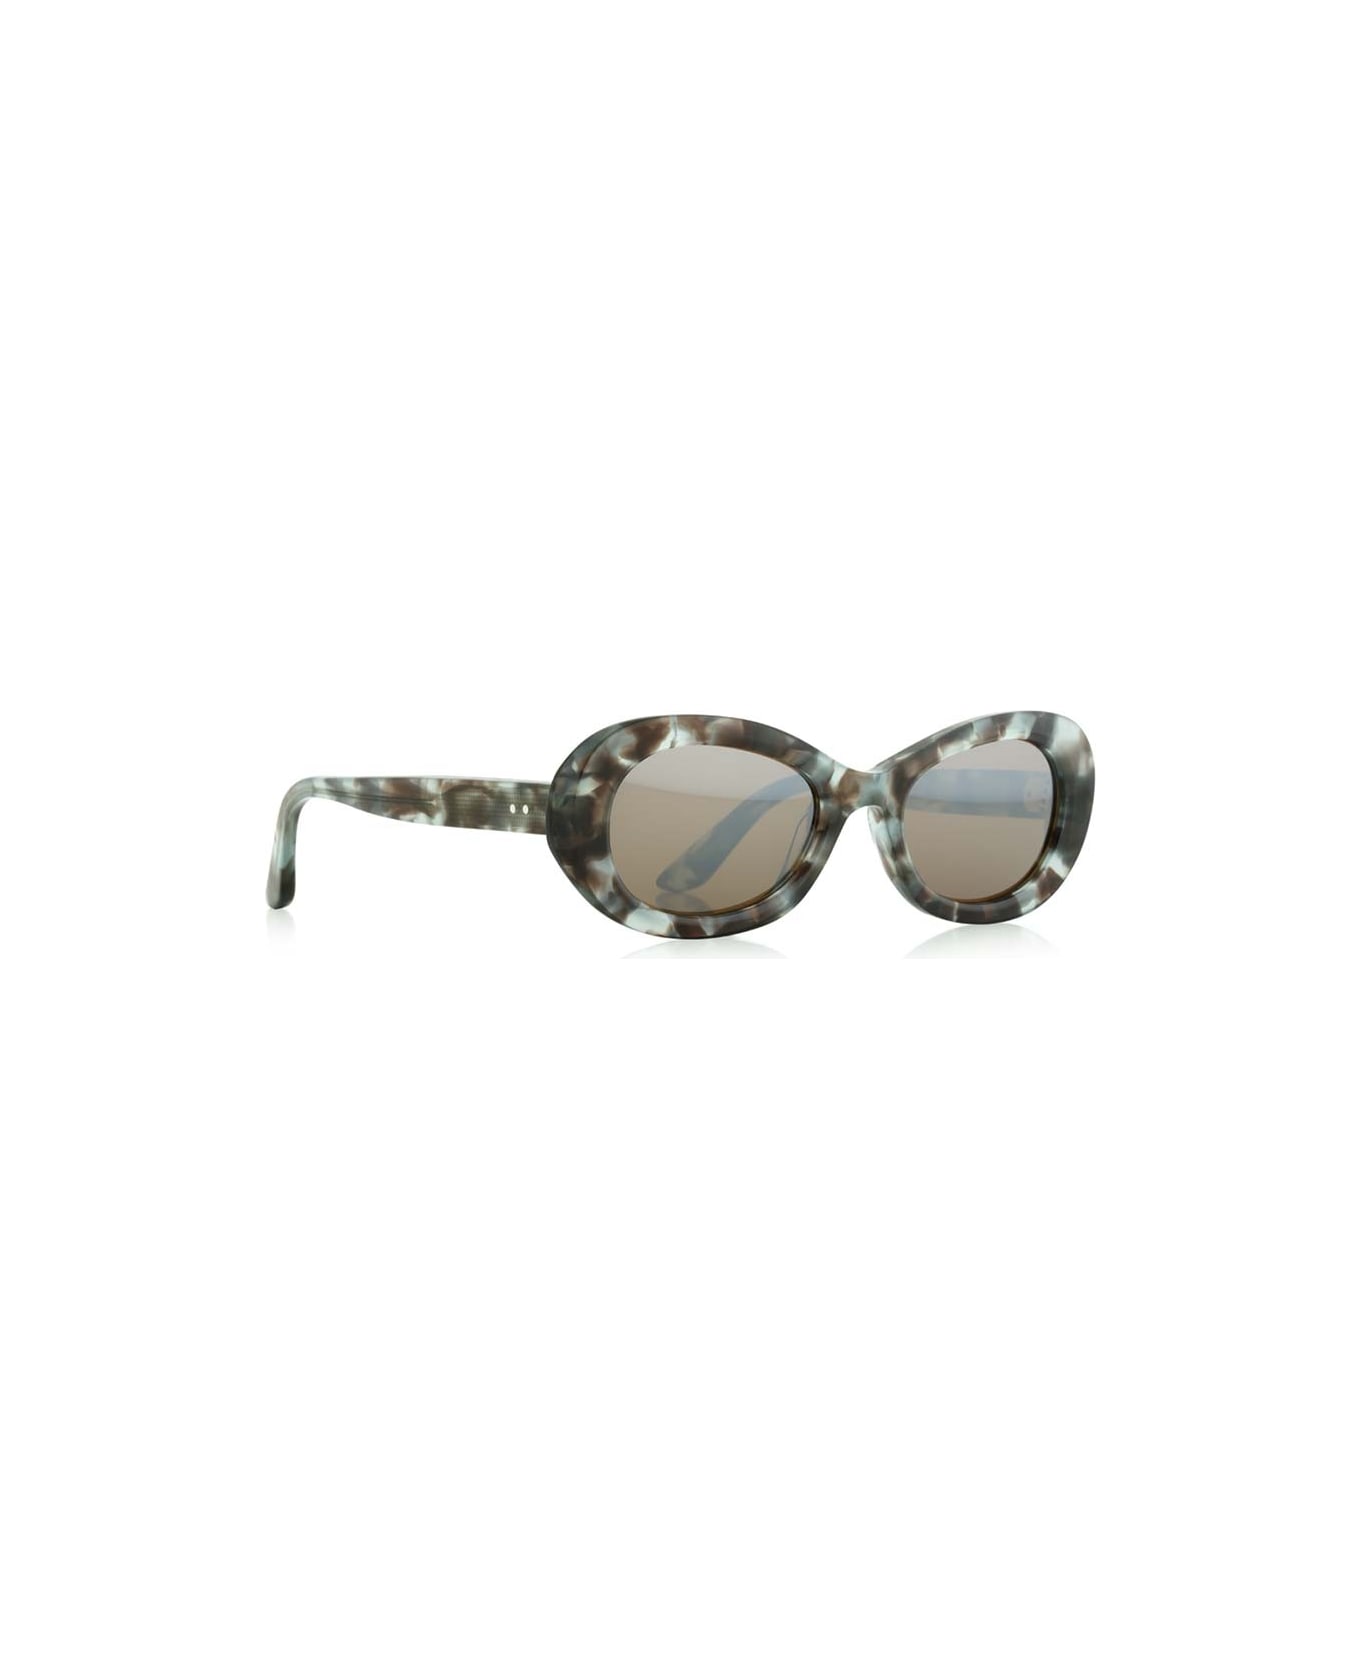 Robert La Roche Sunglasses - Havana/Marrone サングラス